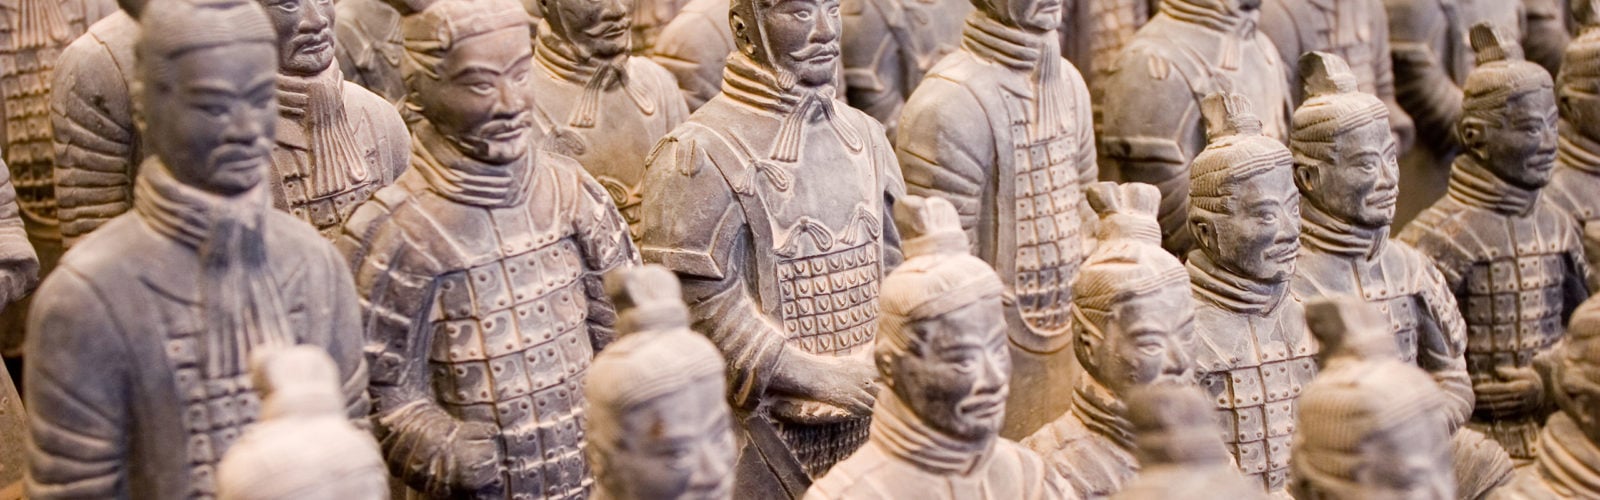 terracotta-army-xi-an-china